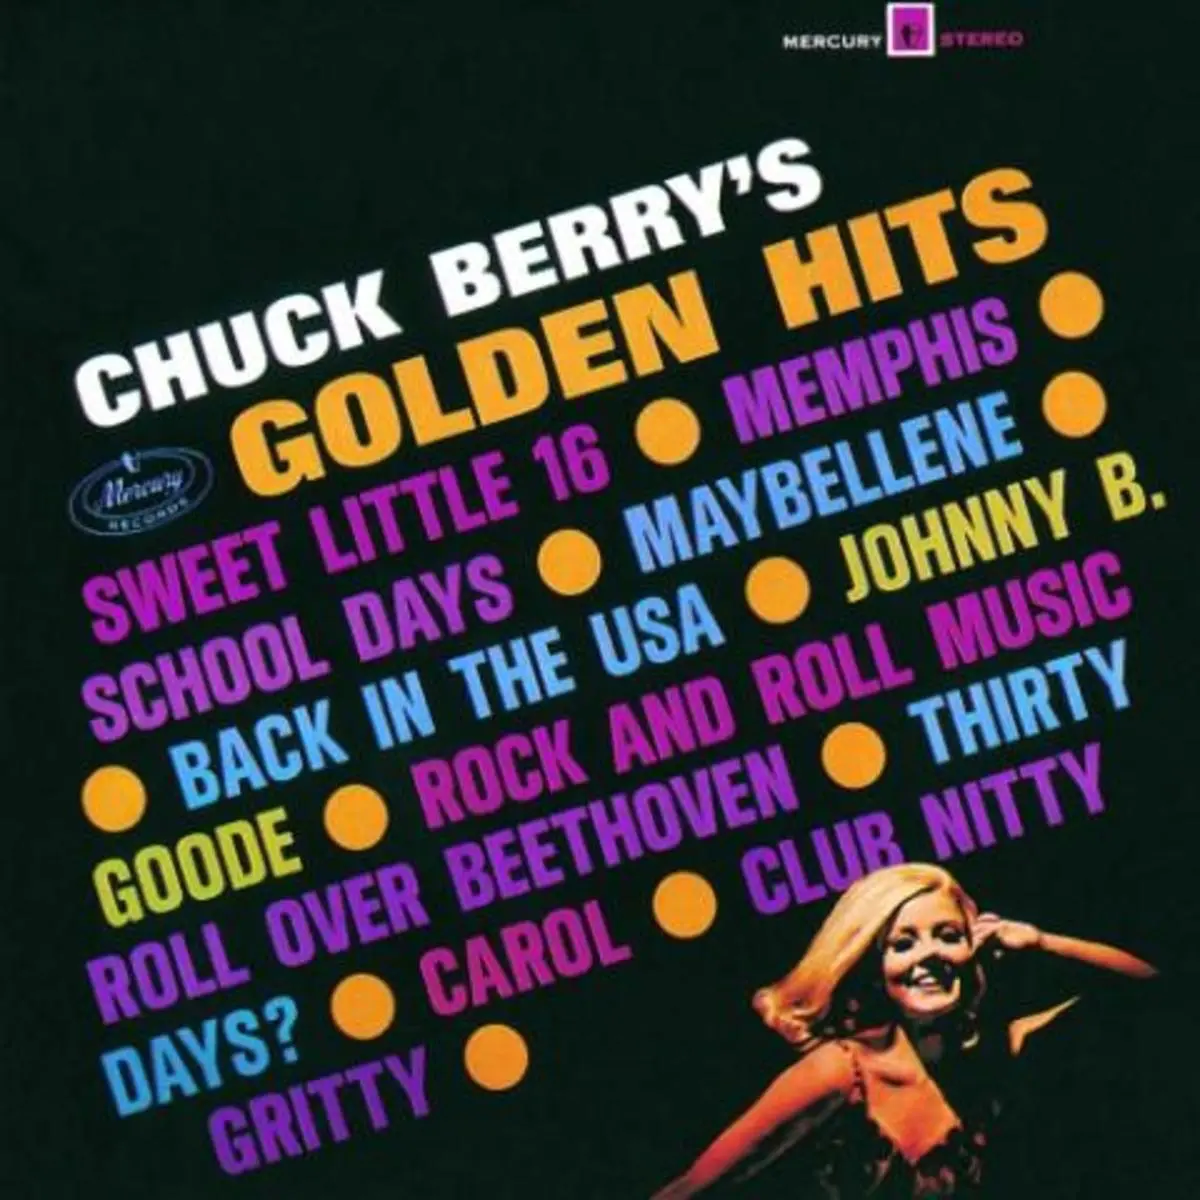 Johnny B Goode Lyrics In English Chuck Berry S Golden Hits Johnny B Goode Song Lyrics In English Free Online On Gaana Com